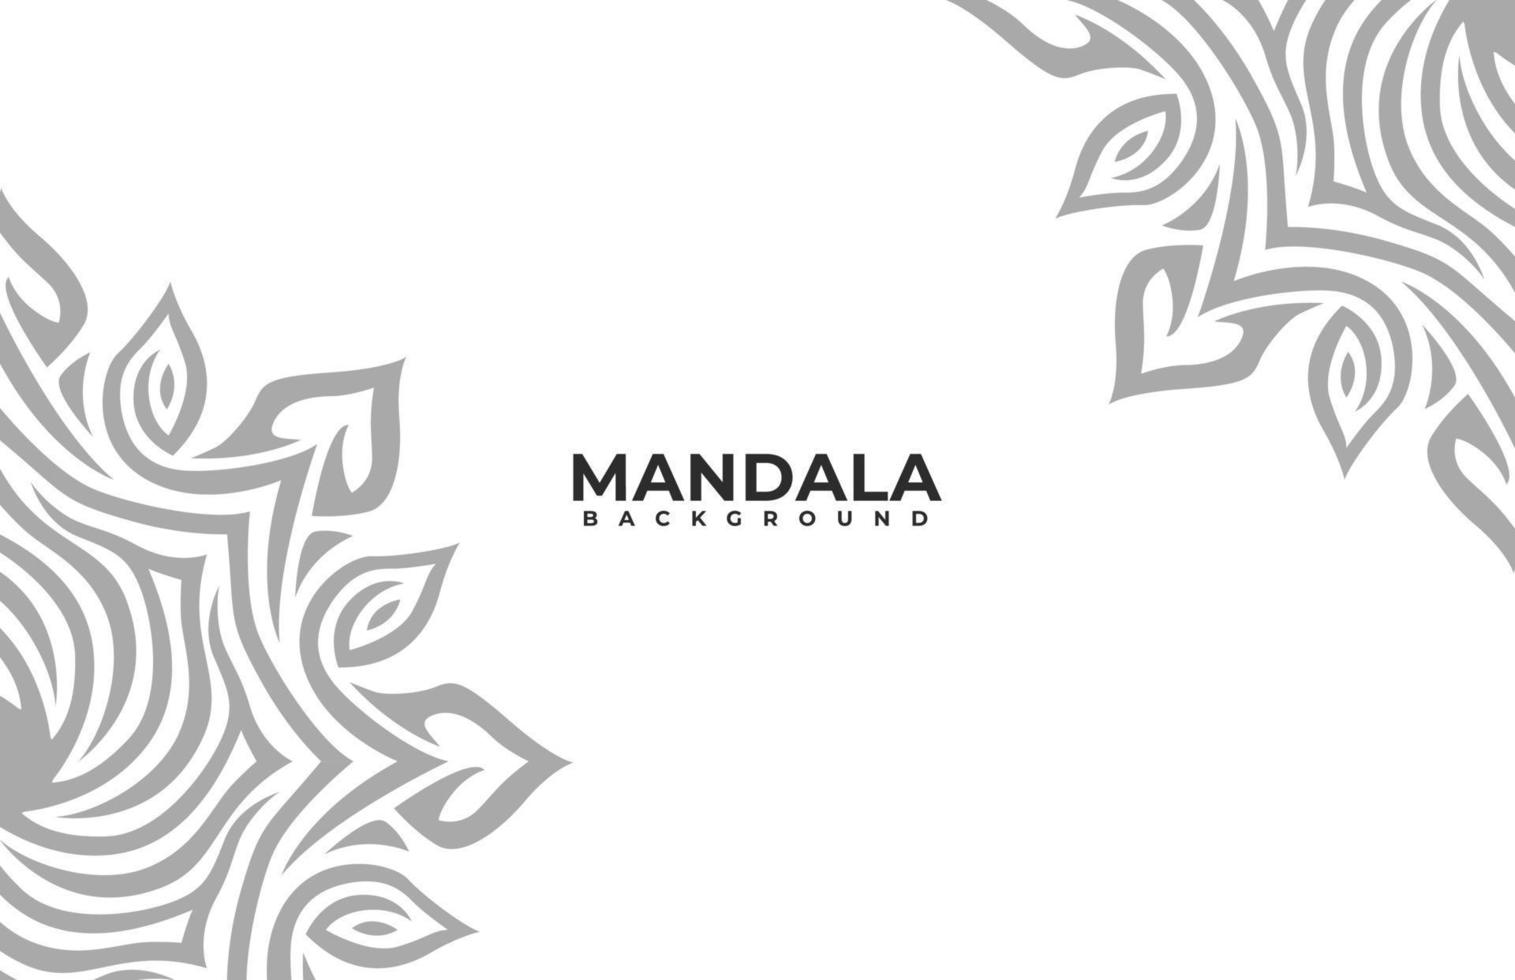 mandala art background, tribal ornament background, wallpaper with ornament, floral ornament background, abstract background, Islamic art mandala, indian ornament, traditional ornament vector